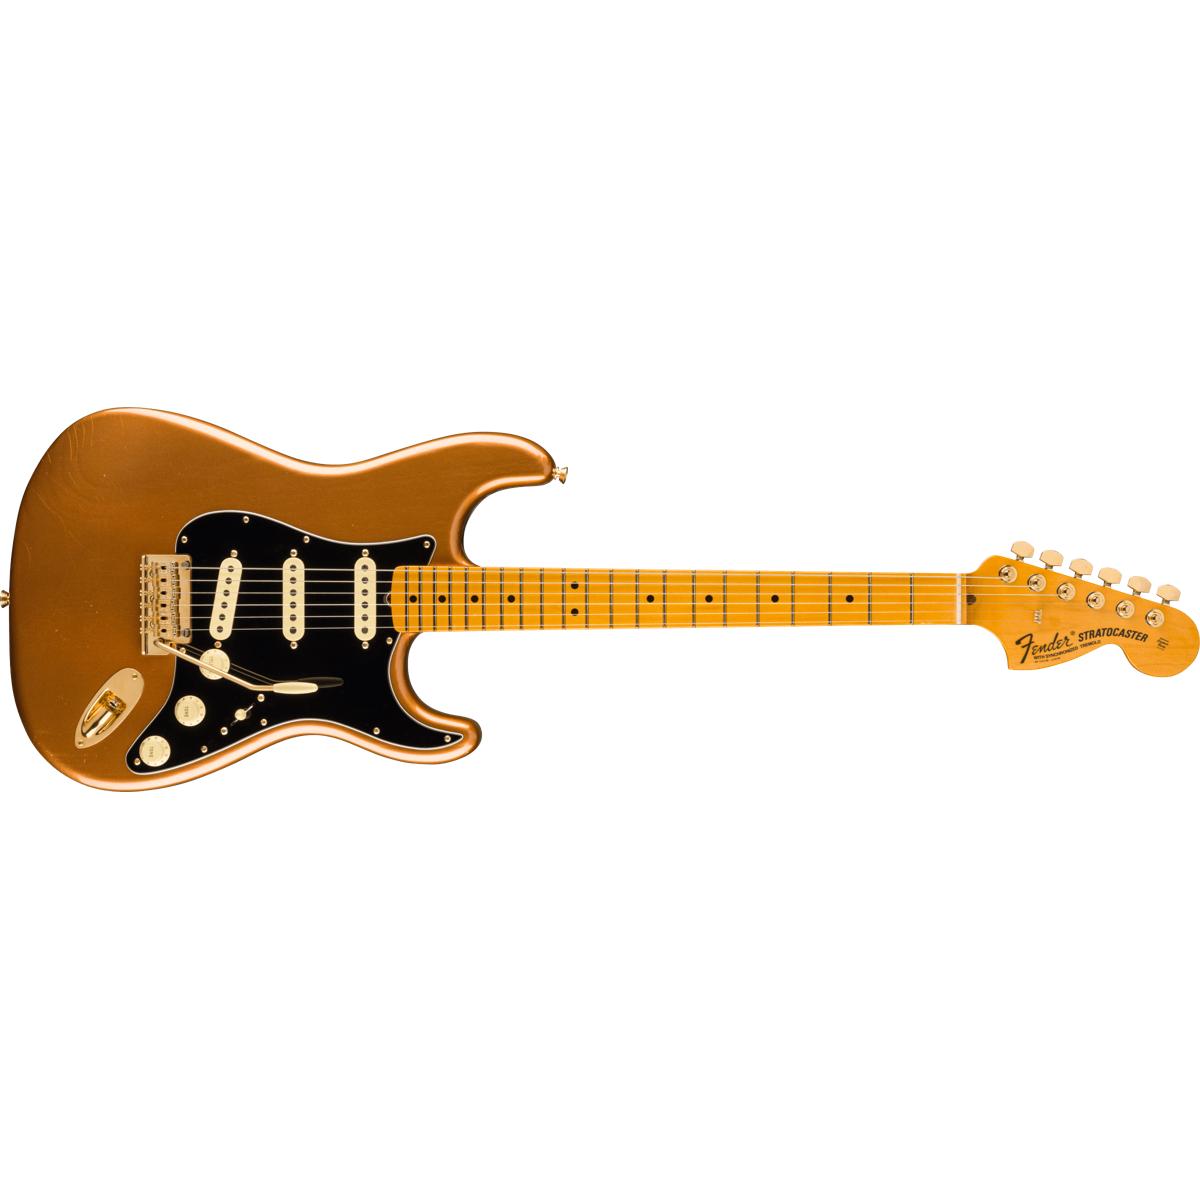 Fender American Bruno Mars Stratocaster Electric Guitar MN Mars Mocha - 0116862877